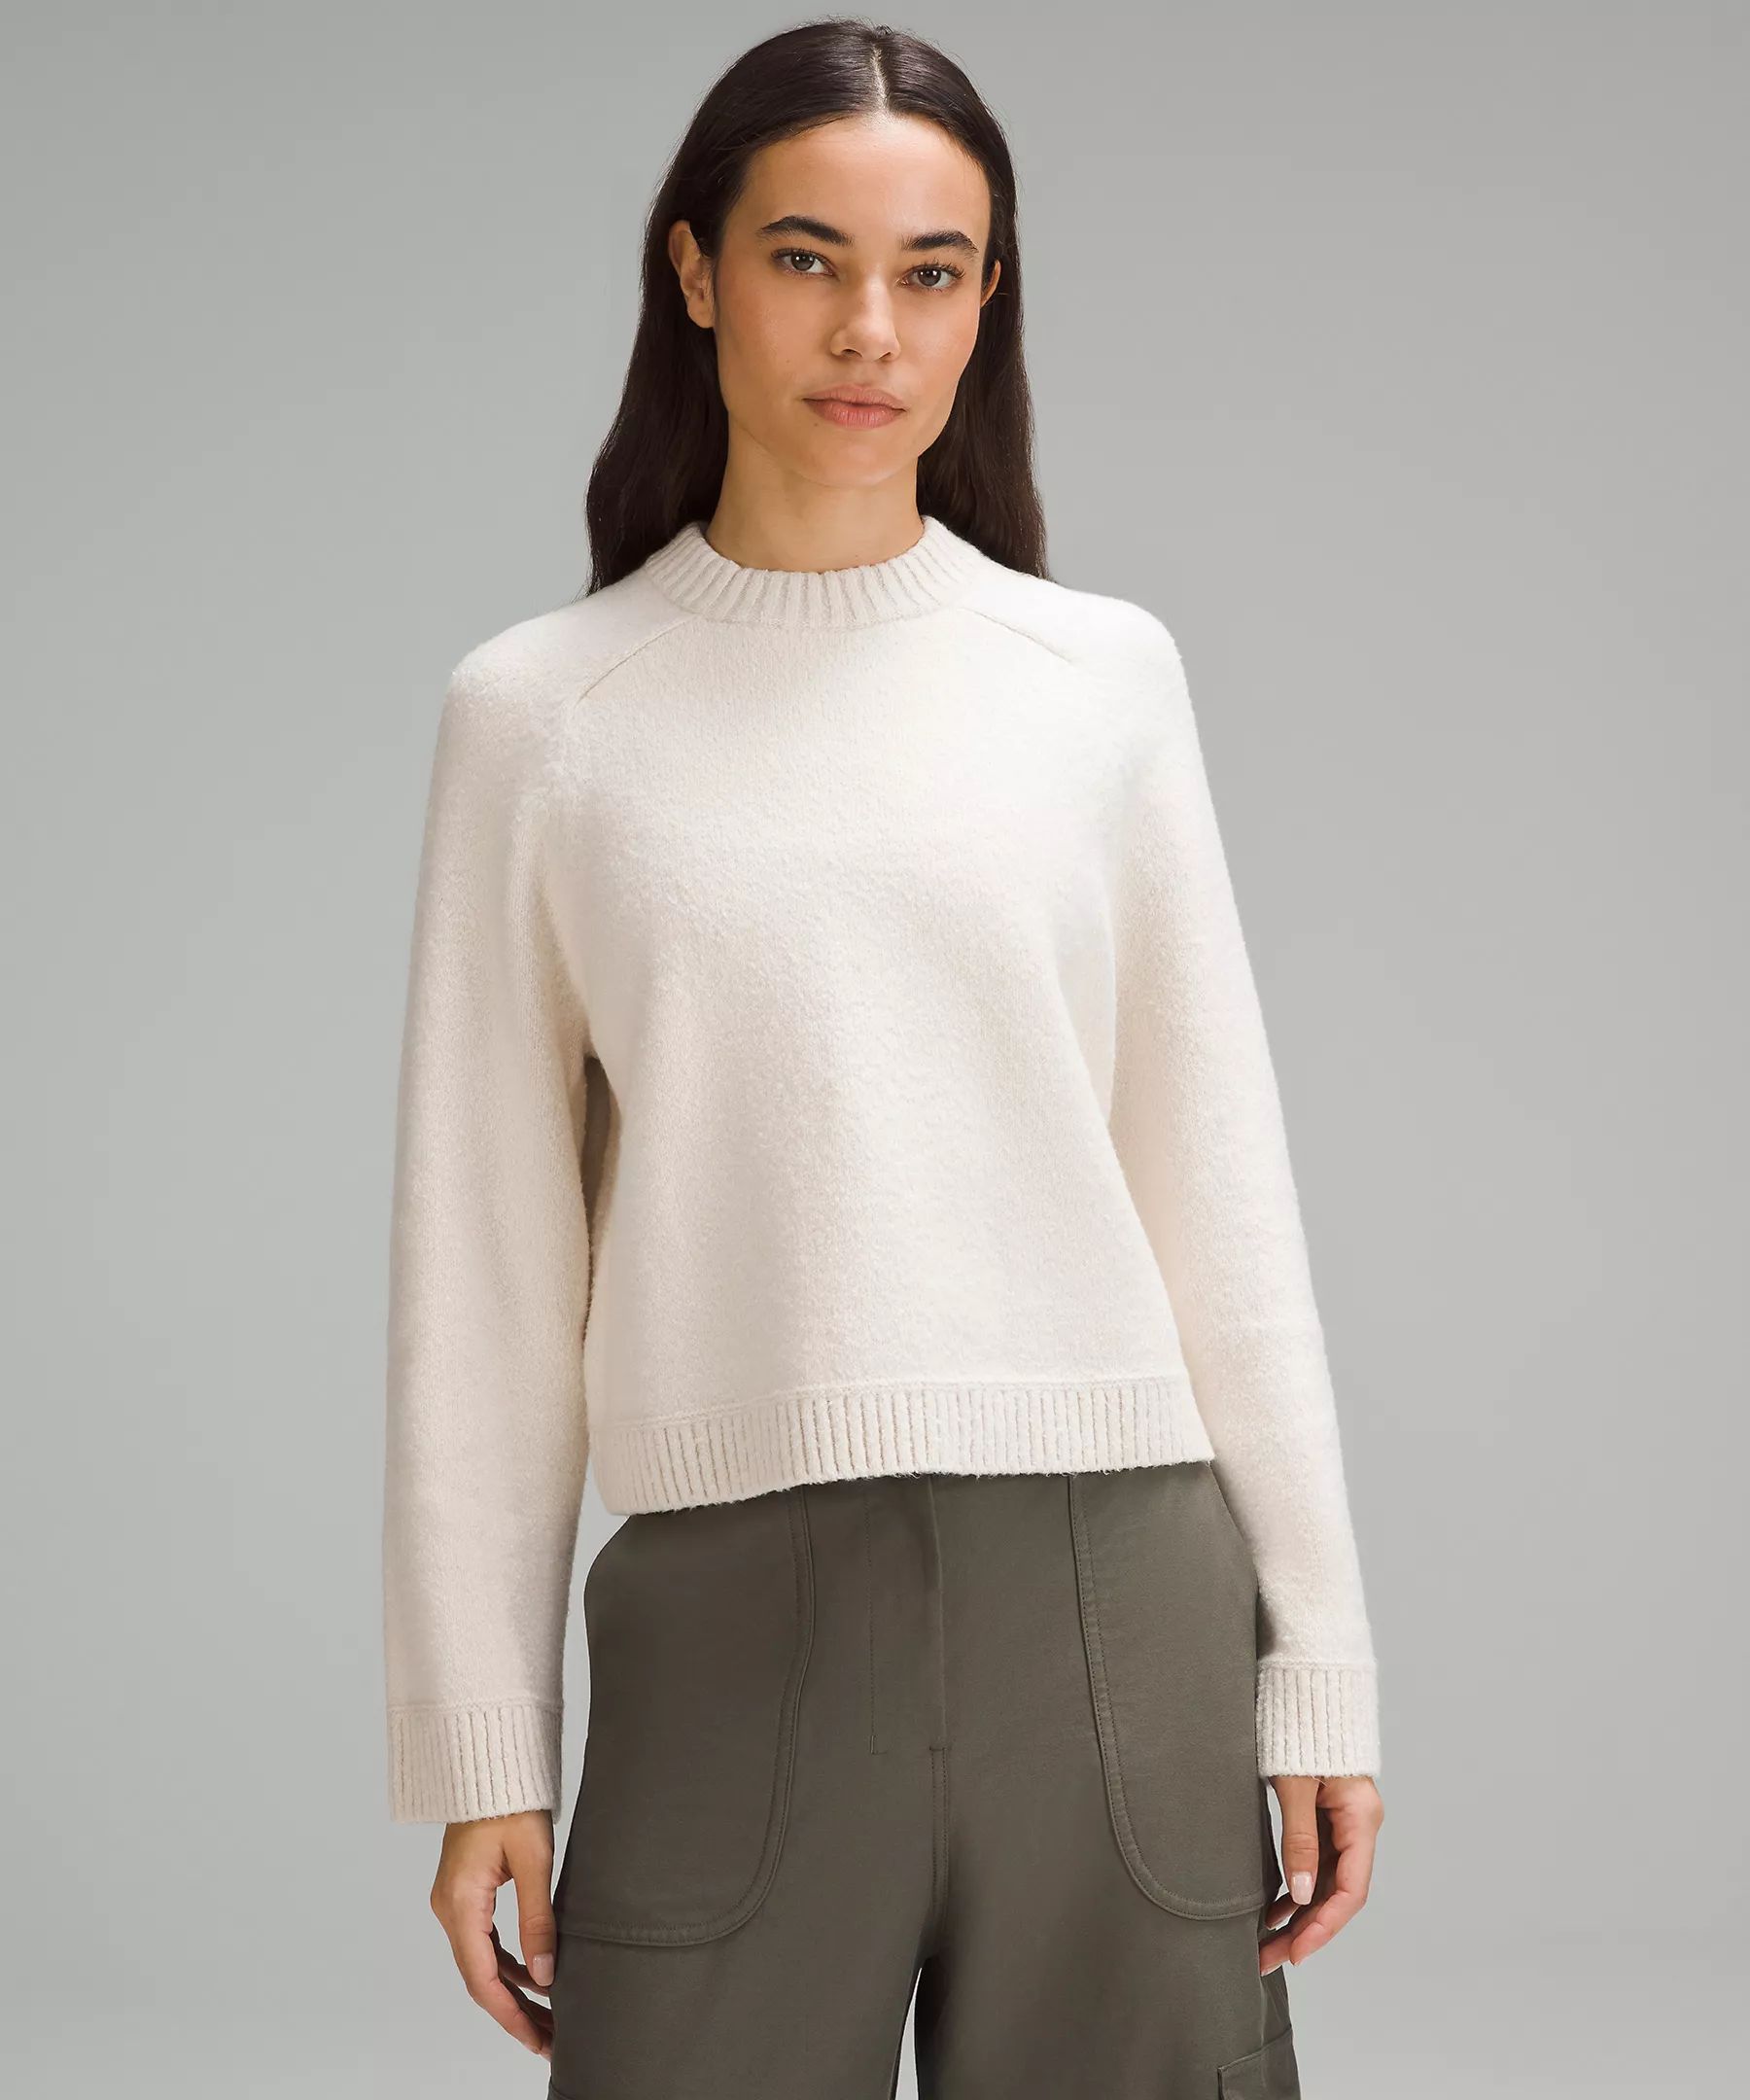 Brushed Cotton Merino Blend Crewneck | Women's Hoodies & Sweatshirts | lululemon | Lululemon (US)